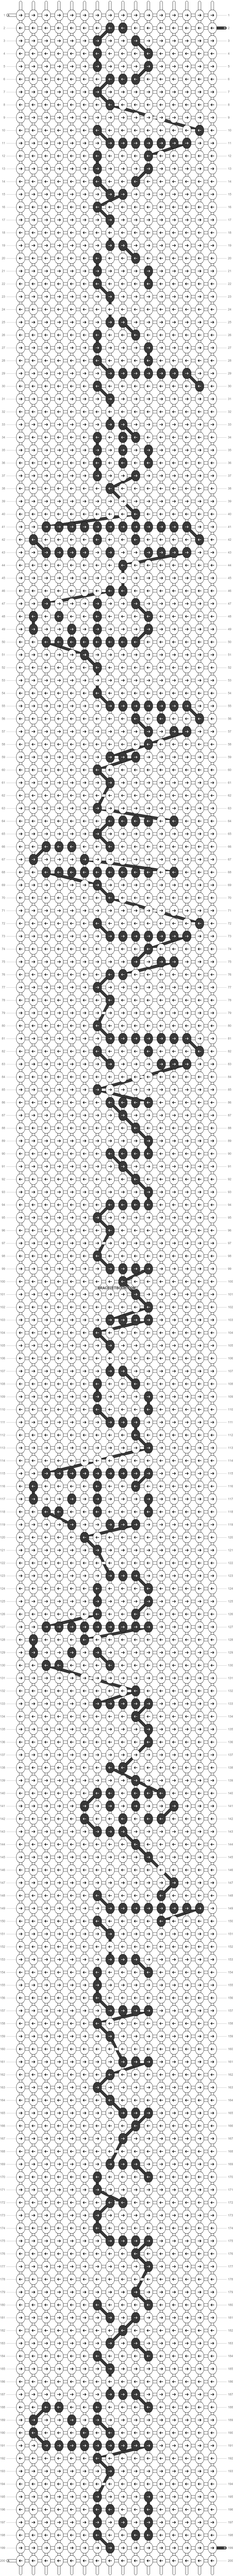 Alpha pattern #45458 pattern